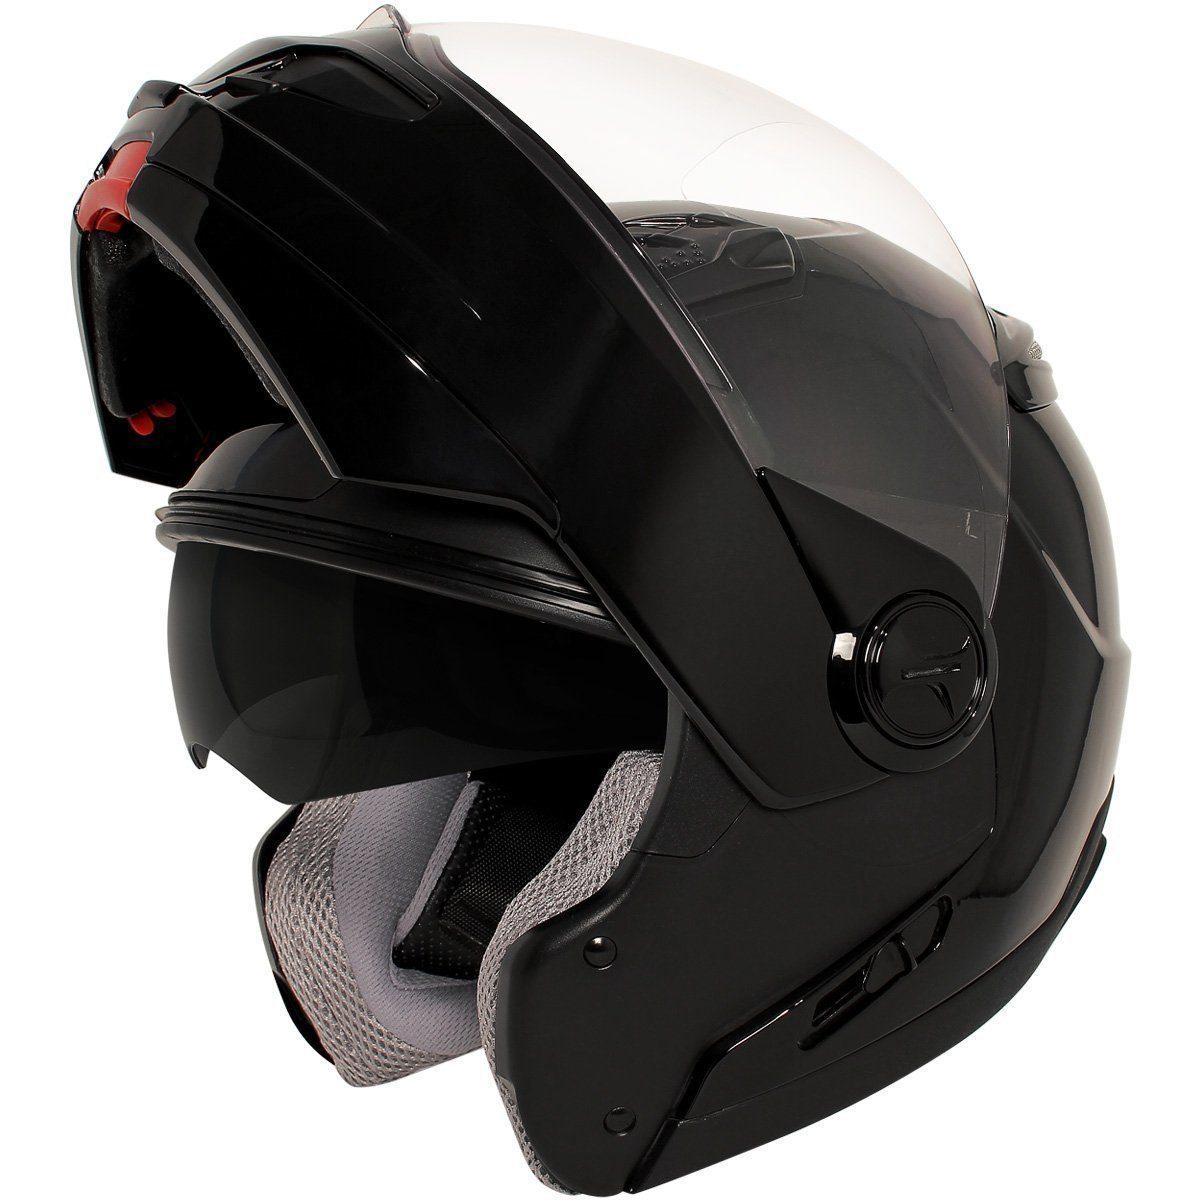 Hawk ST 1198 'Transition' 2 in 1 Glossy Black Modular Motorcycle Helmet